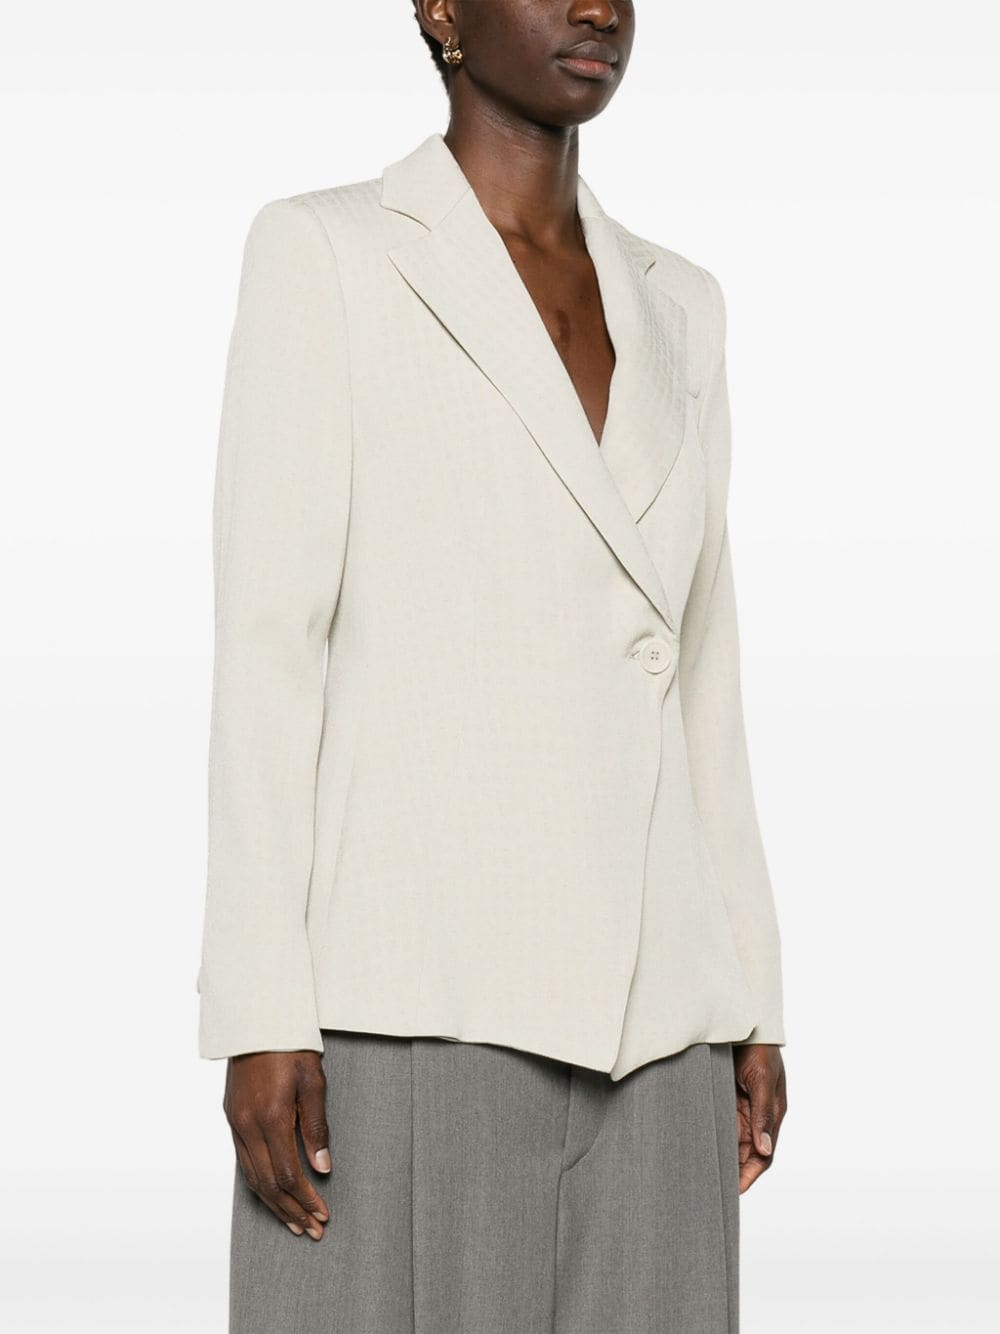 EMPORIO ARMANI Tan Beige Crepe Textured Single-Breasted Blazer Jacket for Women